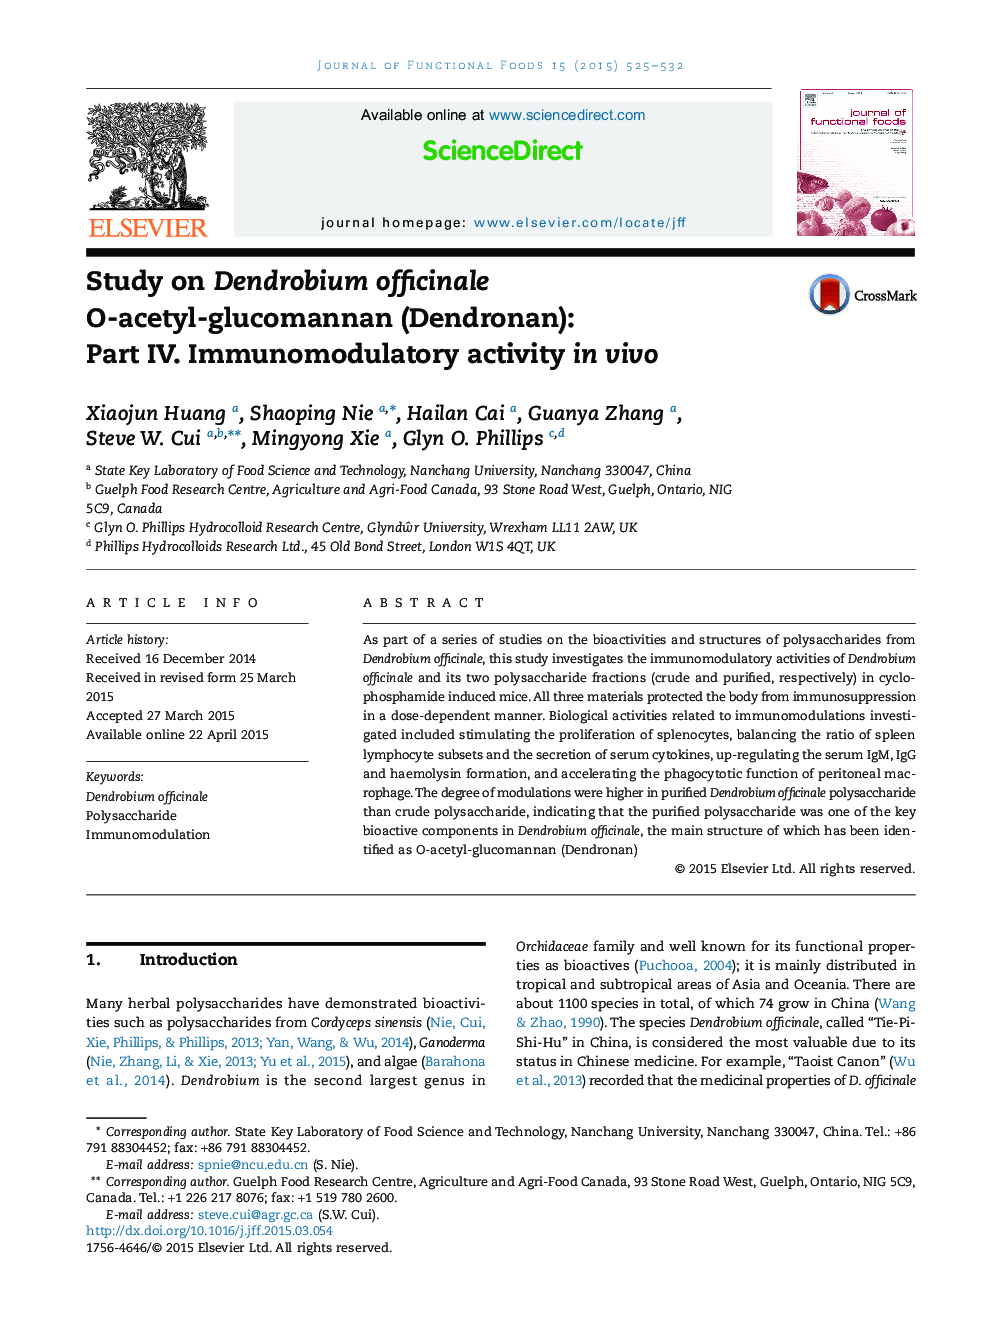 Study on Dendrobium officinale O-acetyl-glucomannan (Dendronan): Part IV. Immunomodulatory activity in vivo